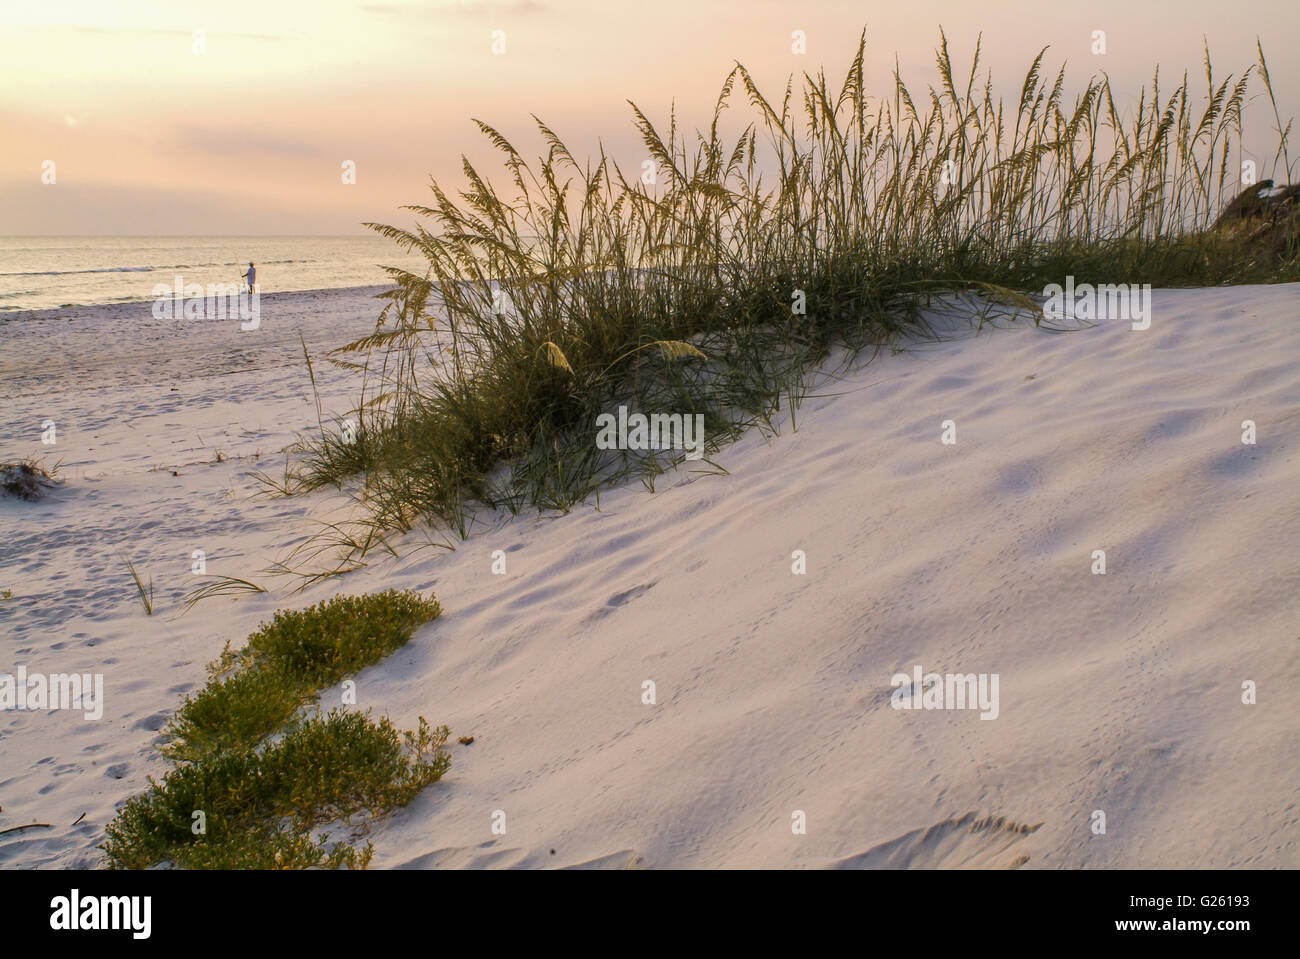 Sea Oats in dunes, St. Joseph's Peninsula State Park, FL. Stock Photo